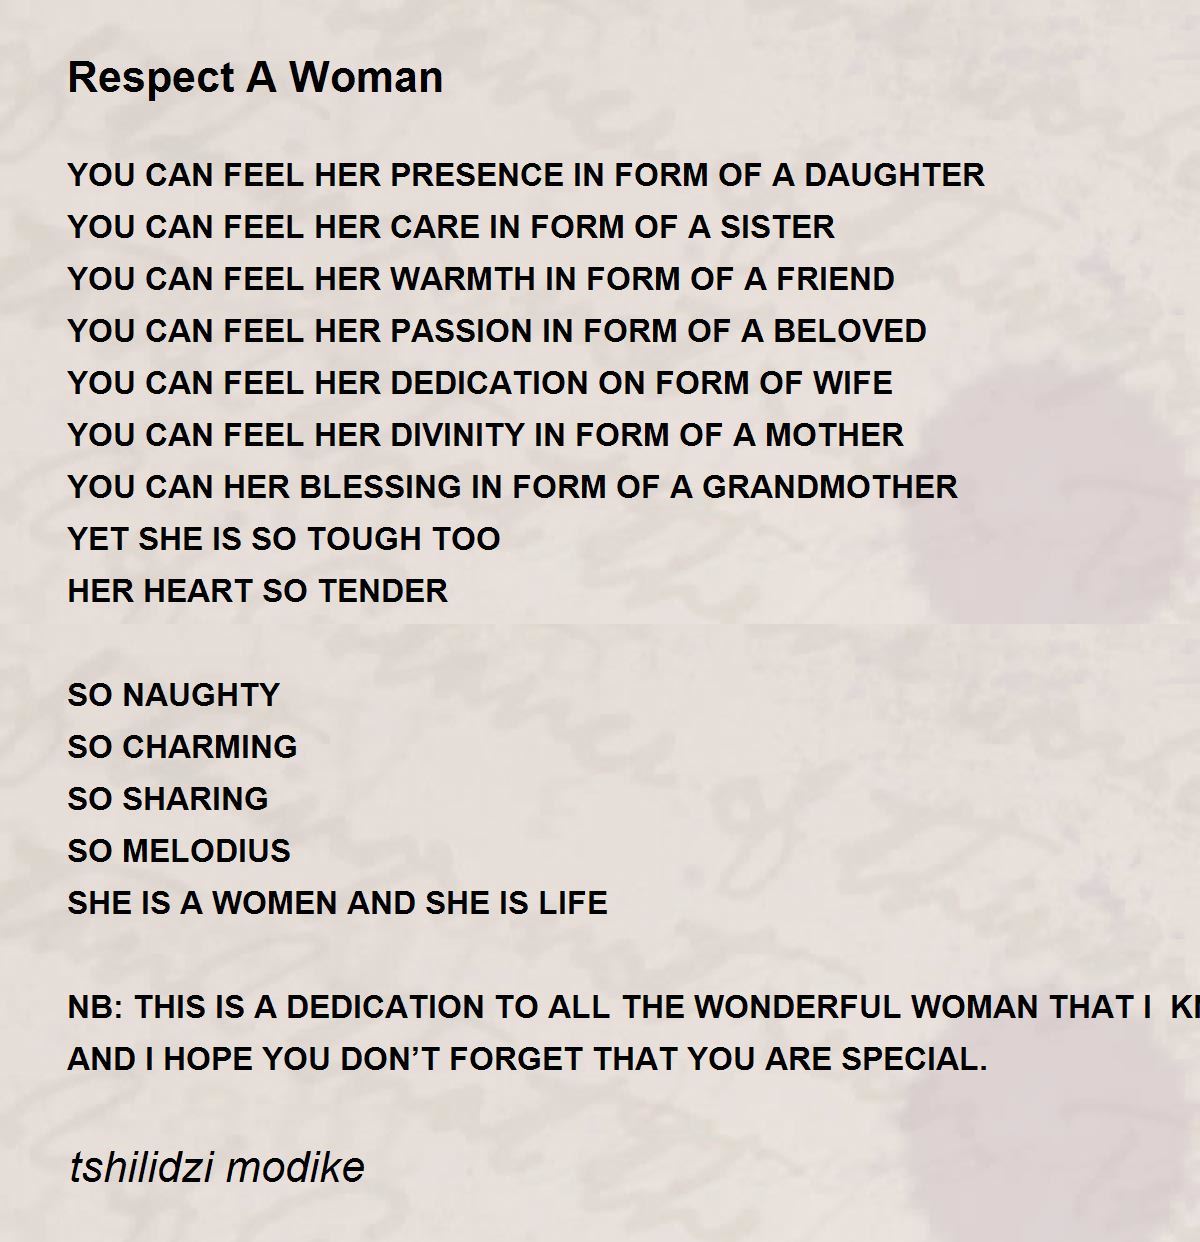 Respect A Woman - Respect A Woman Poem by tshilidzi modike